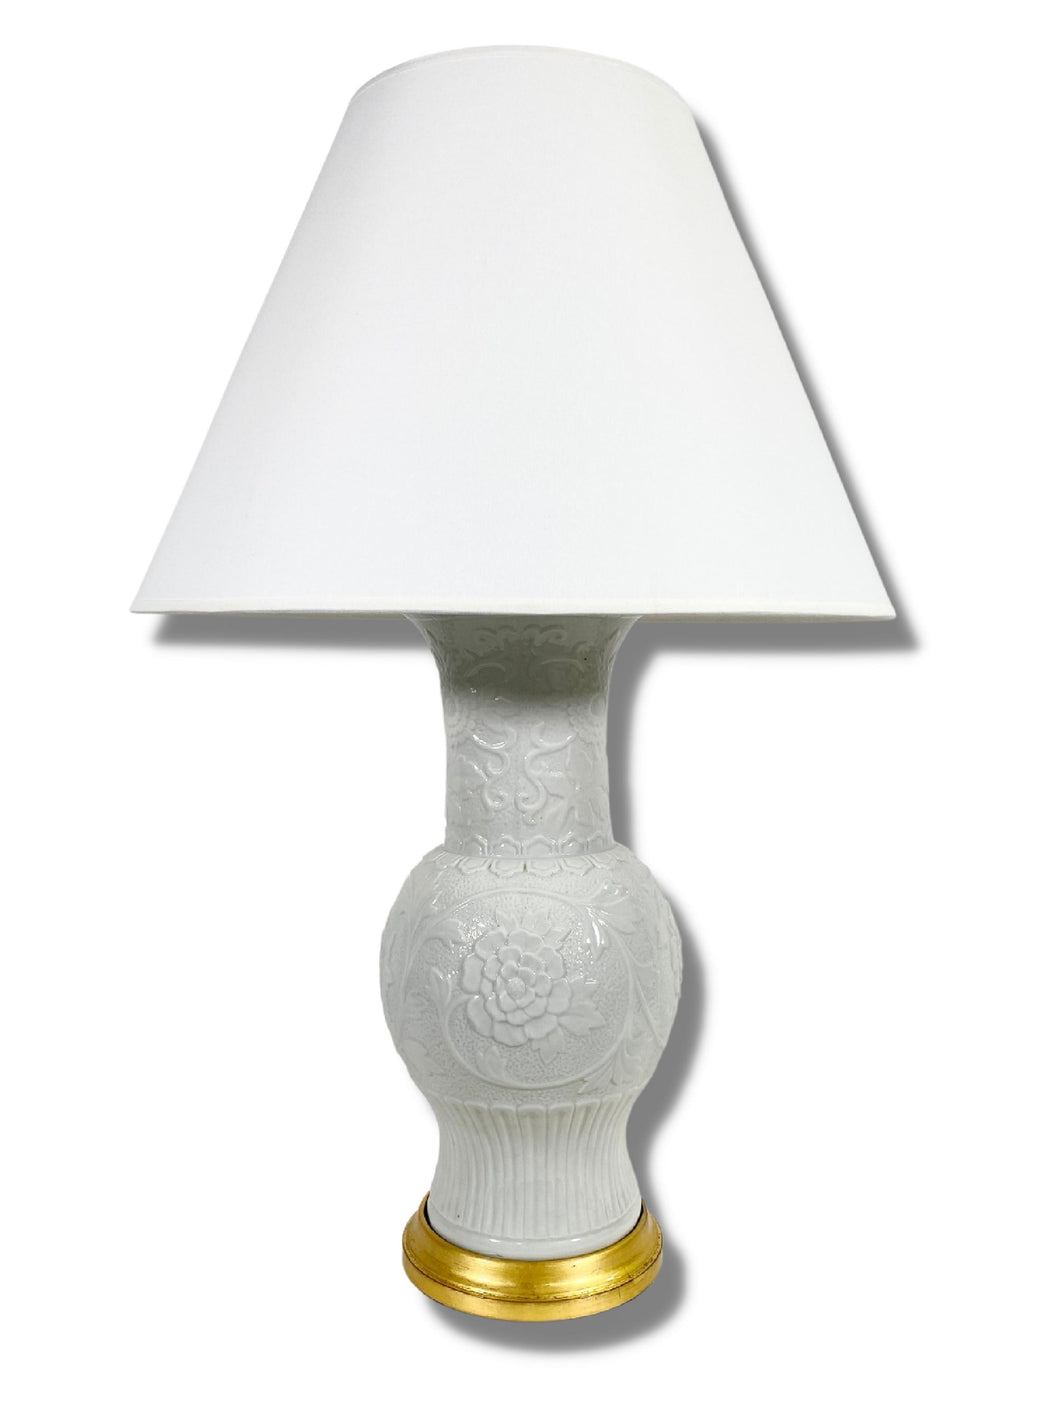 Chinese White Porcelain Lamp